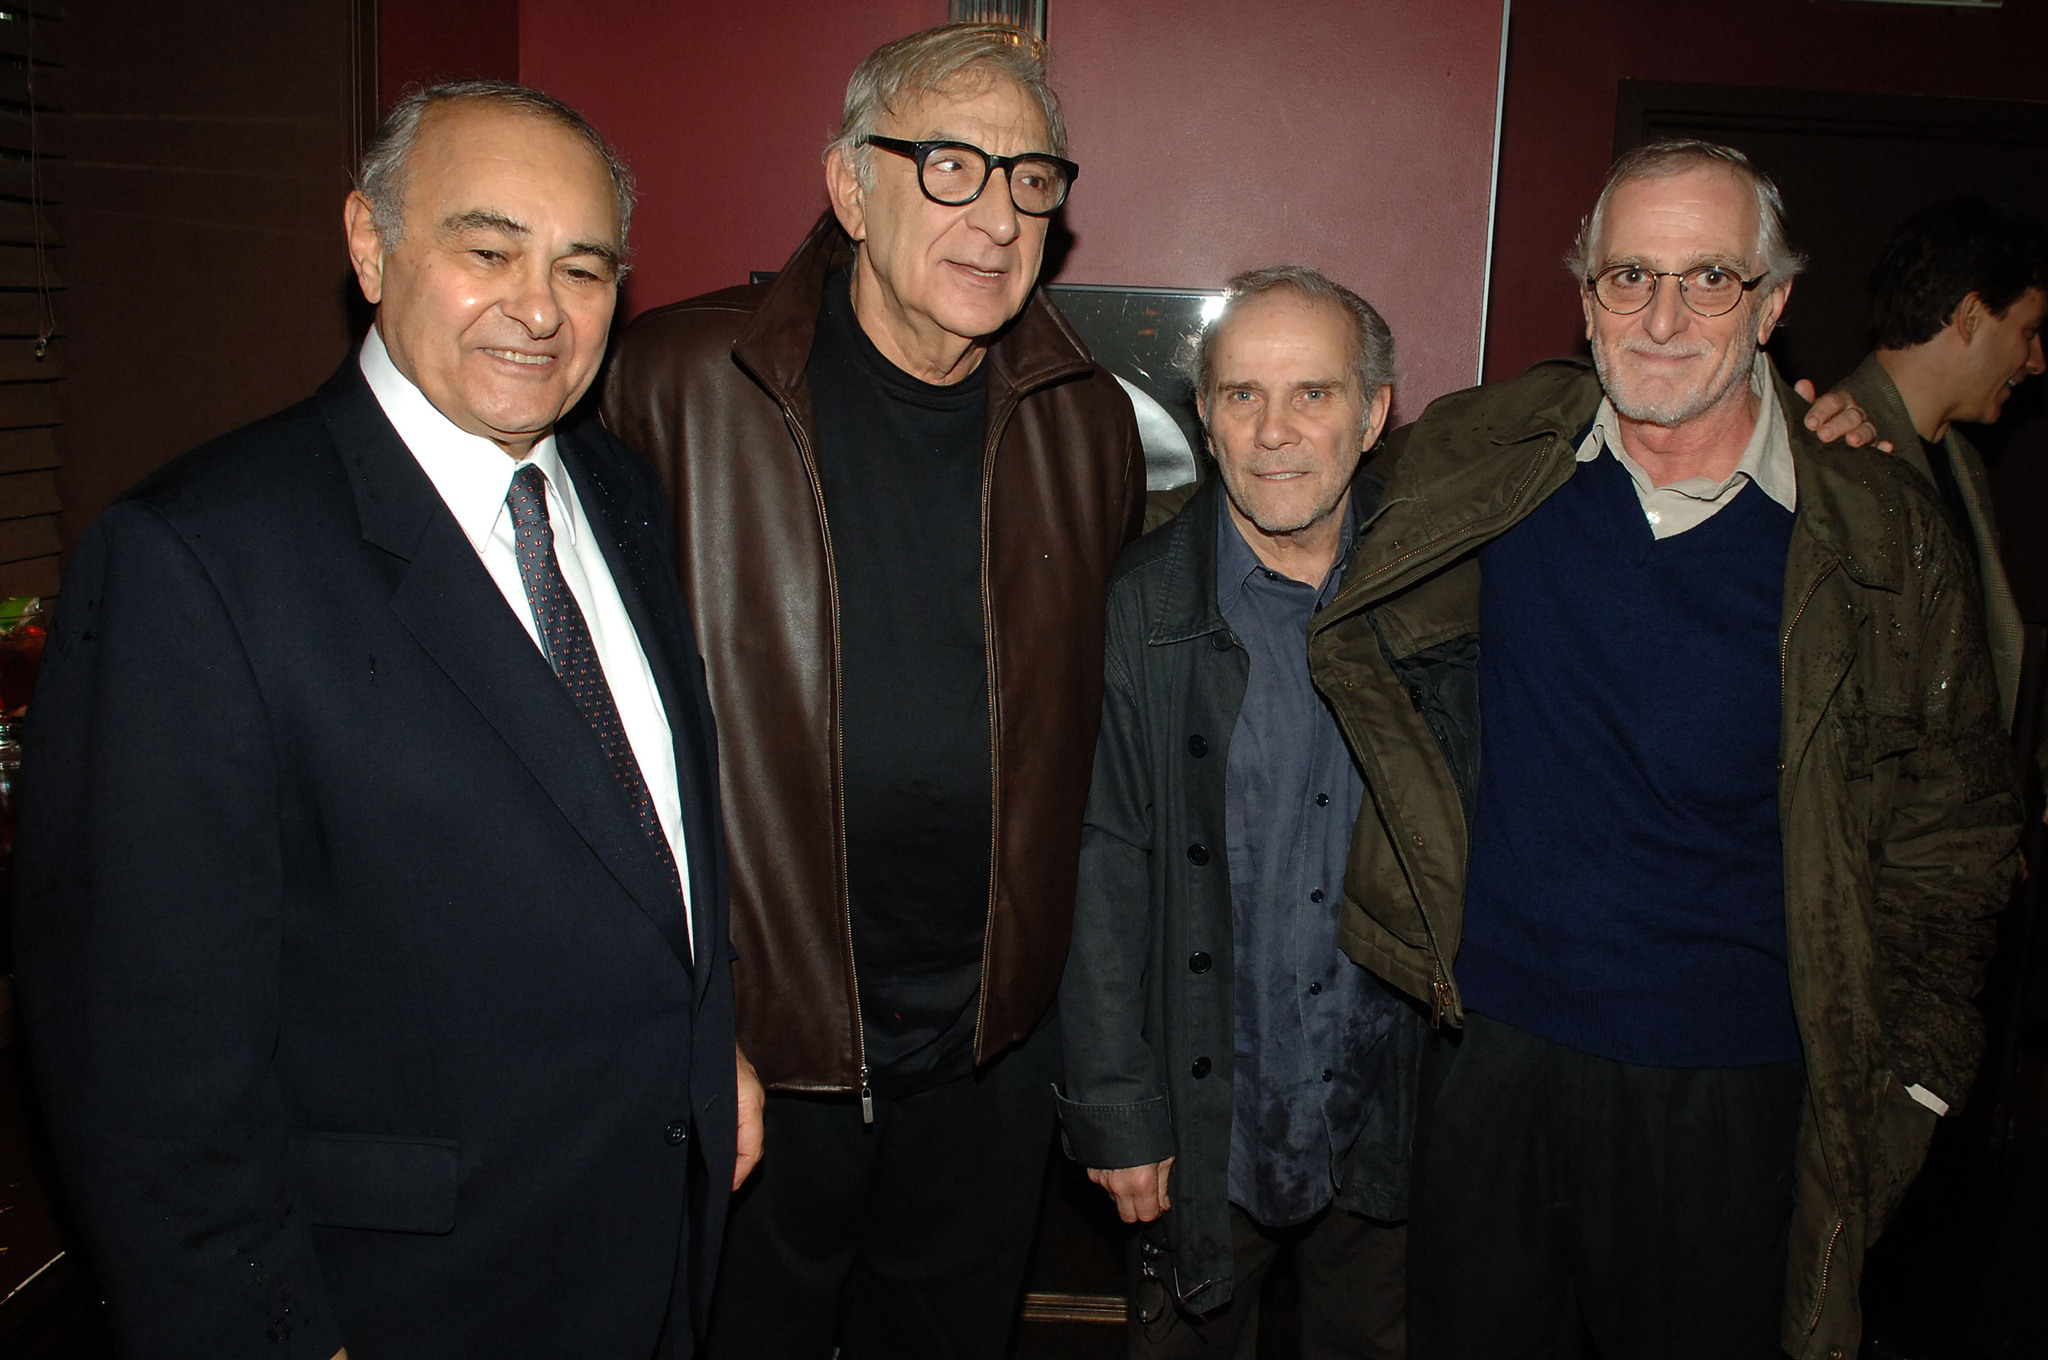 Joseph Ragno, Ed Setrakian and Martin Shakar